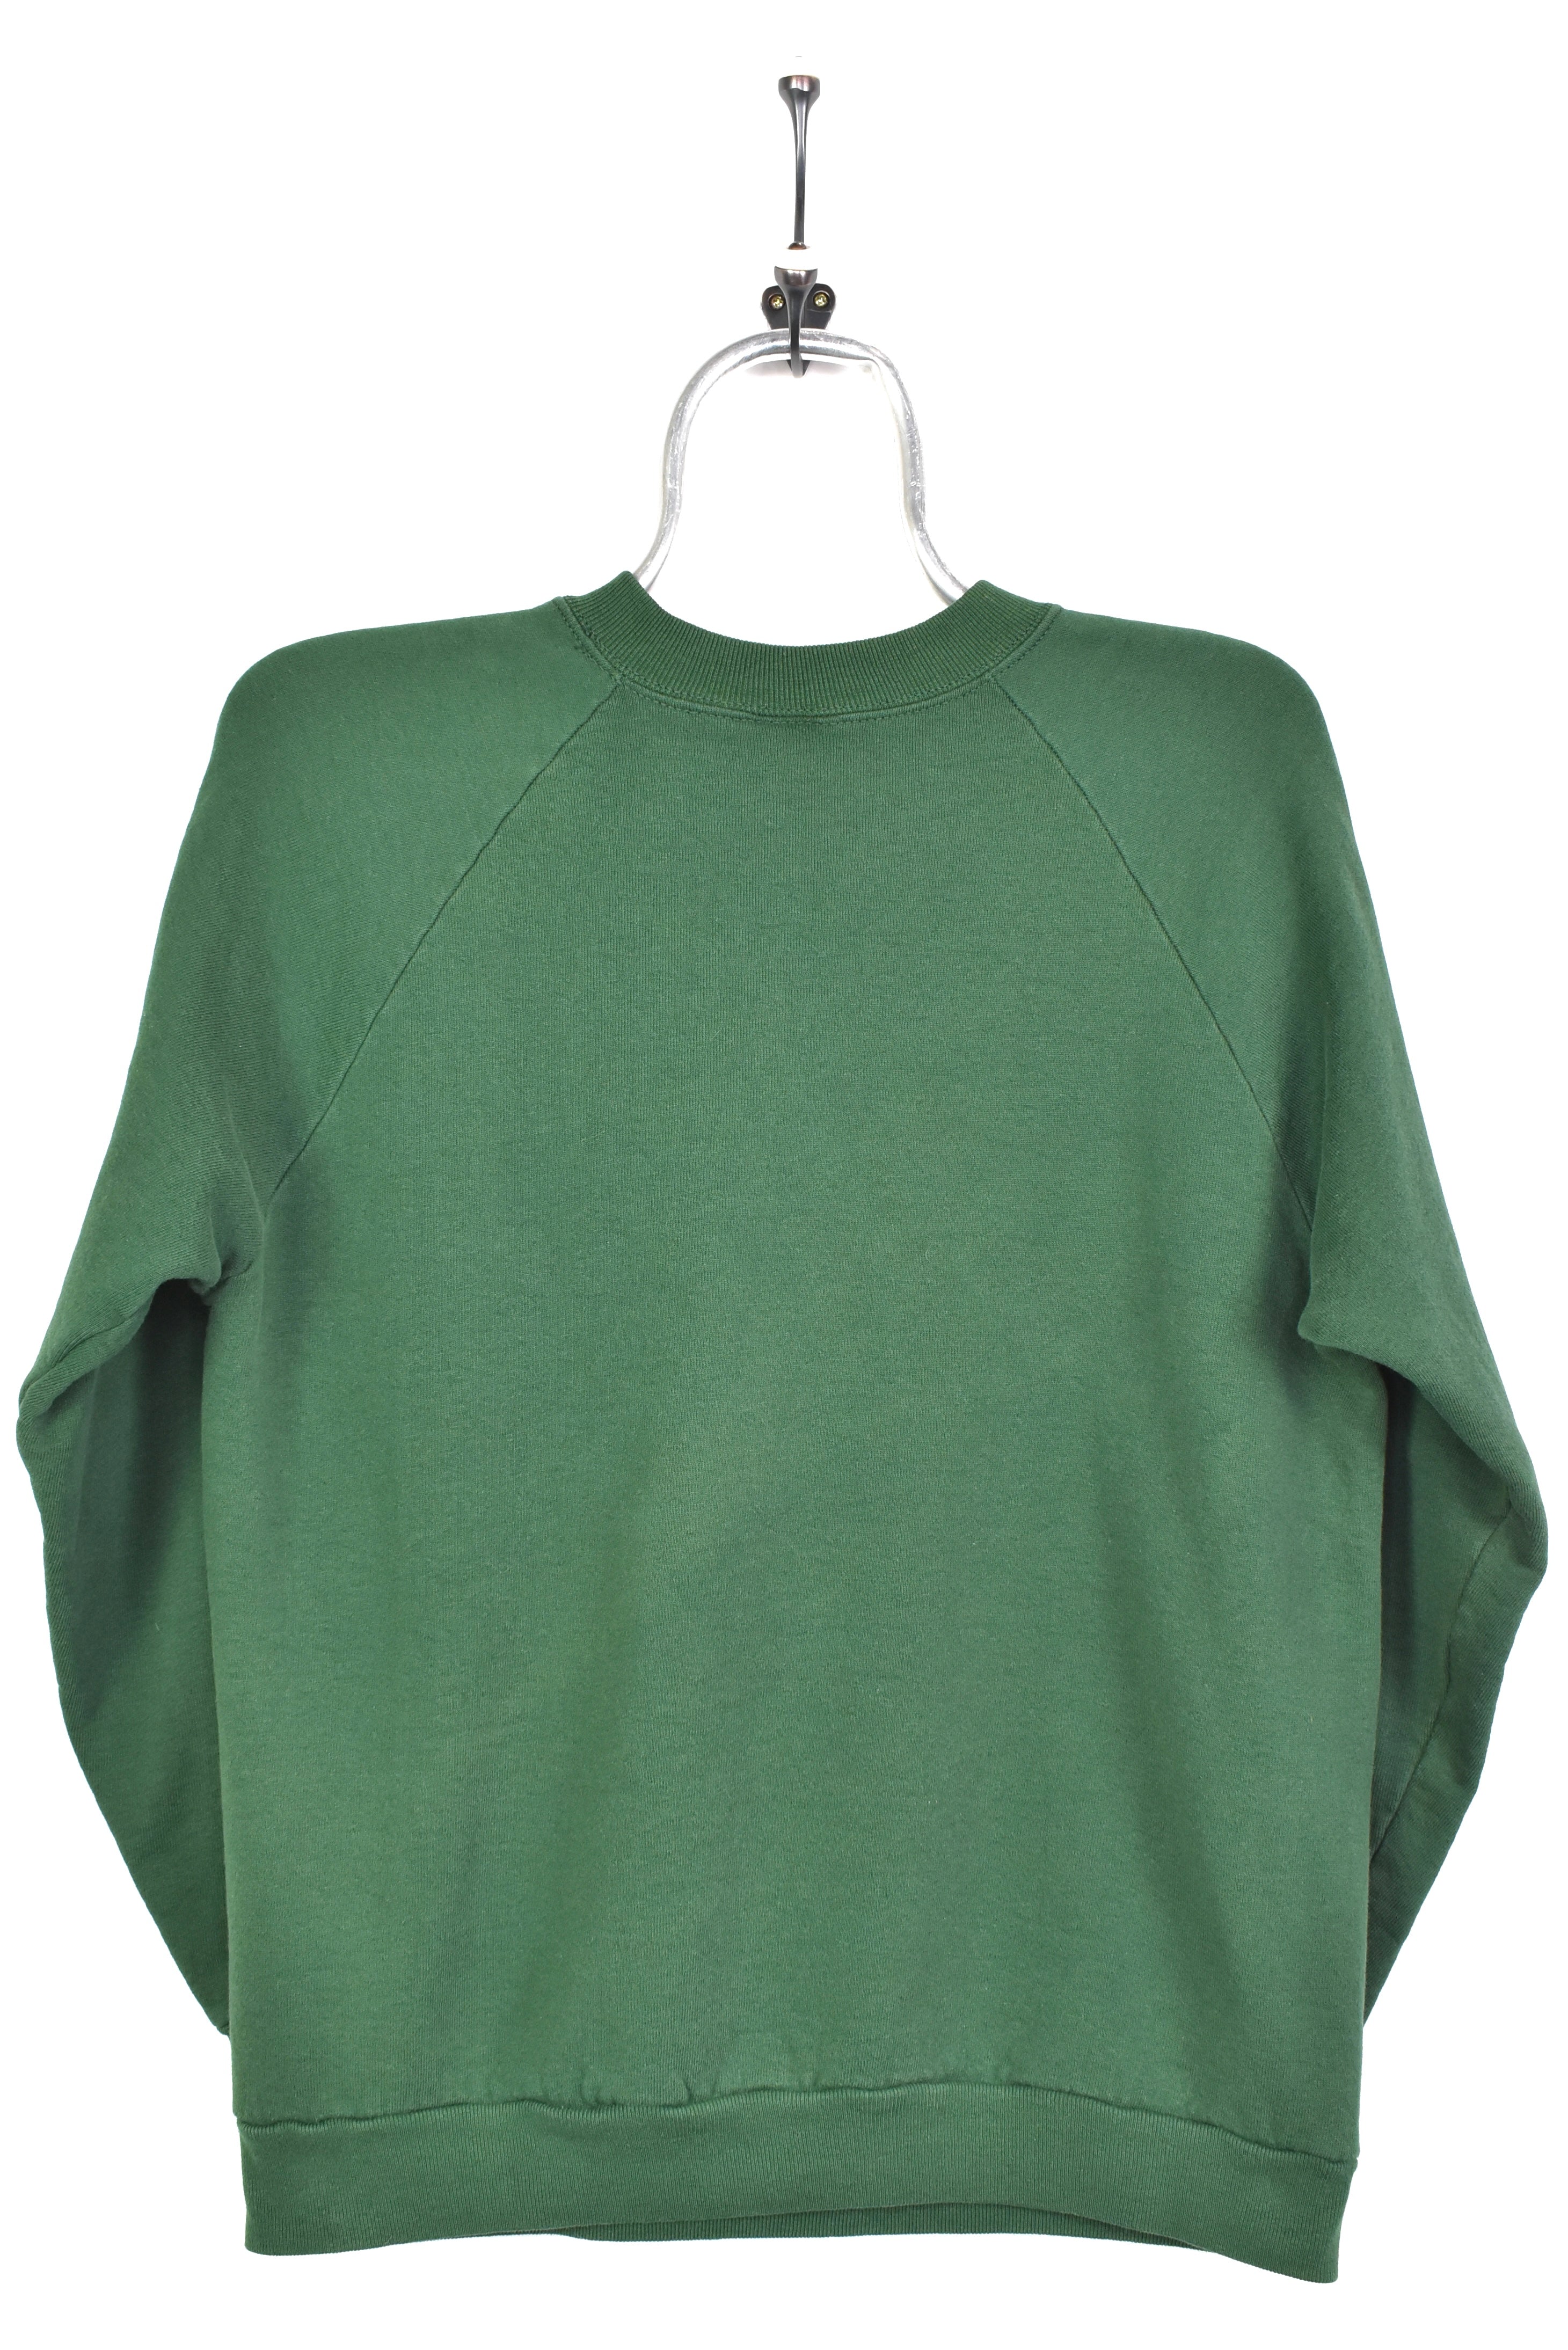 Vintage ulster university green sweatshirt | medium COLLEGE